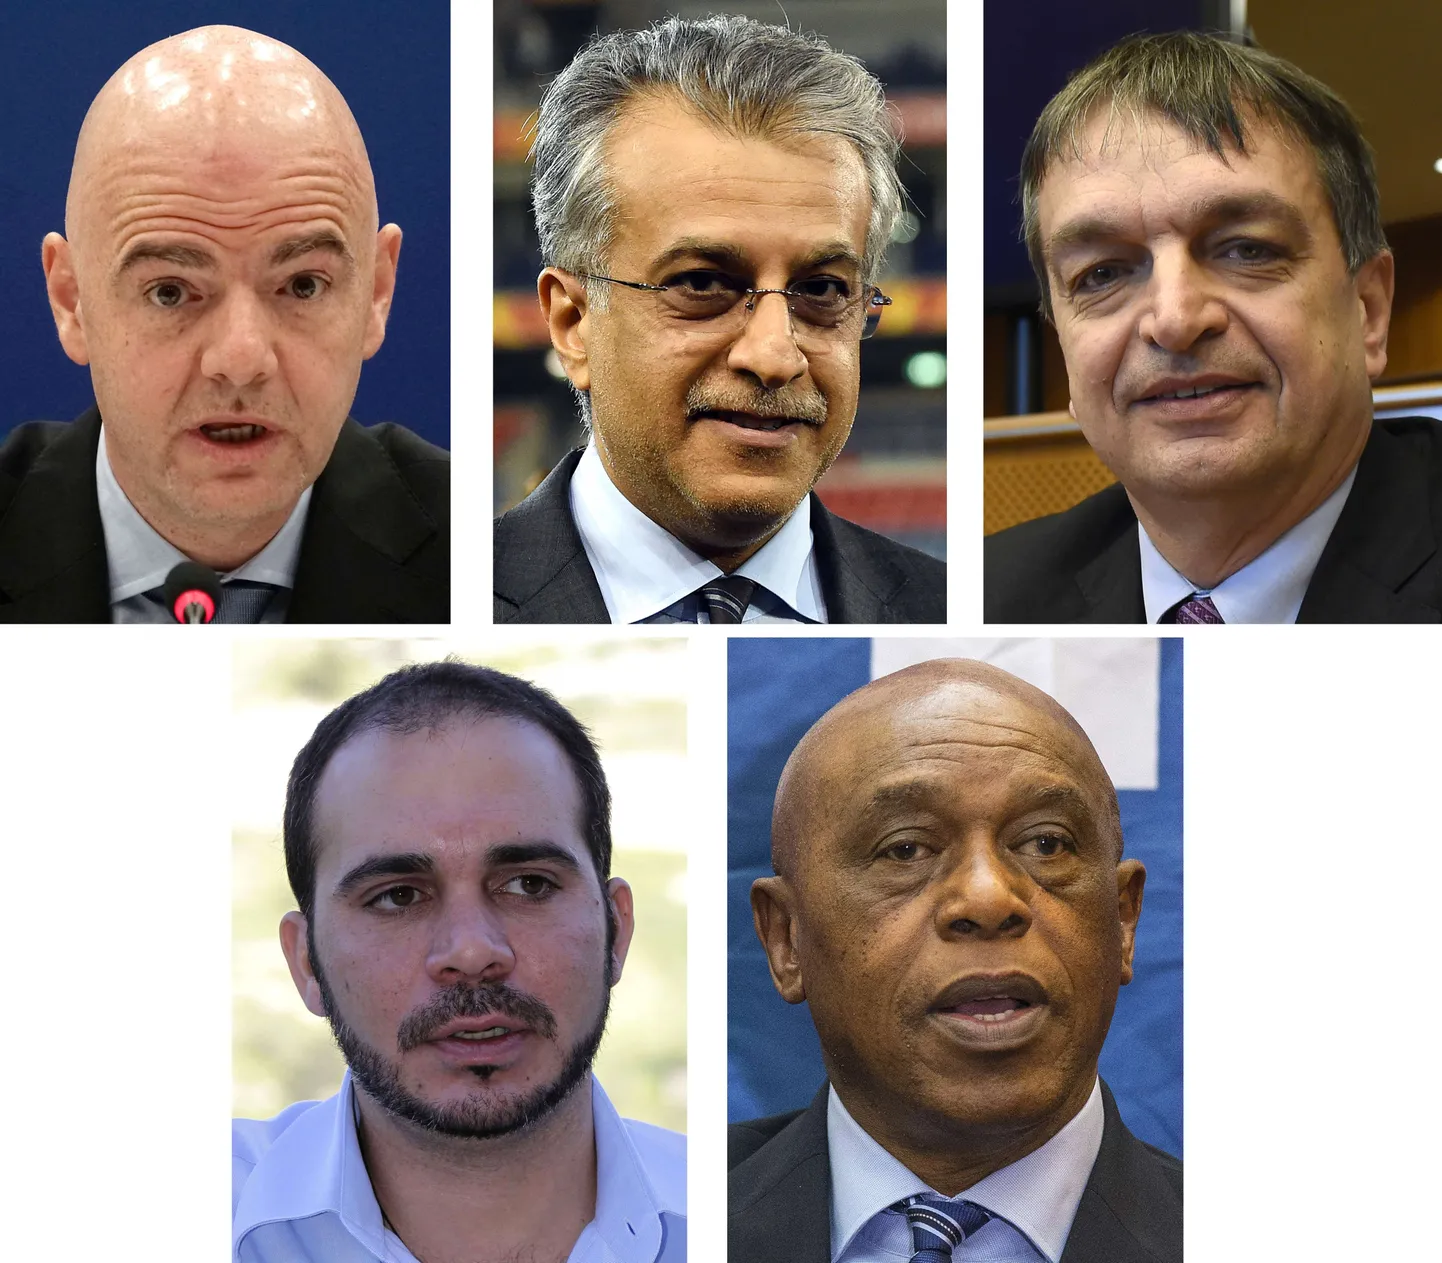 Претенденты на пост президента ФИФА. Шейх Салман - в центре в верхнем ряду.